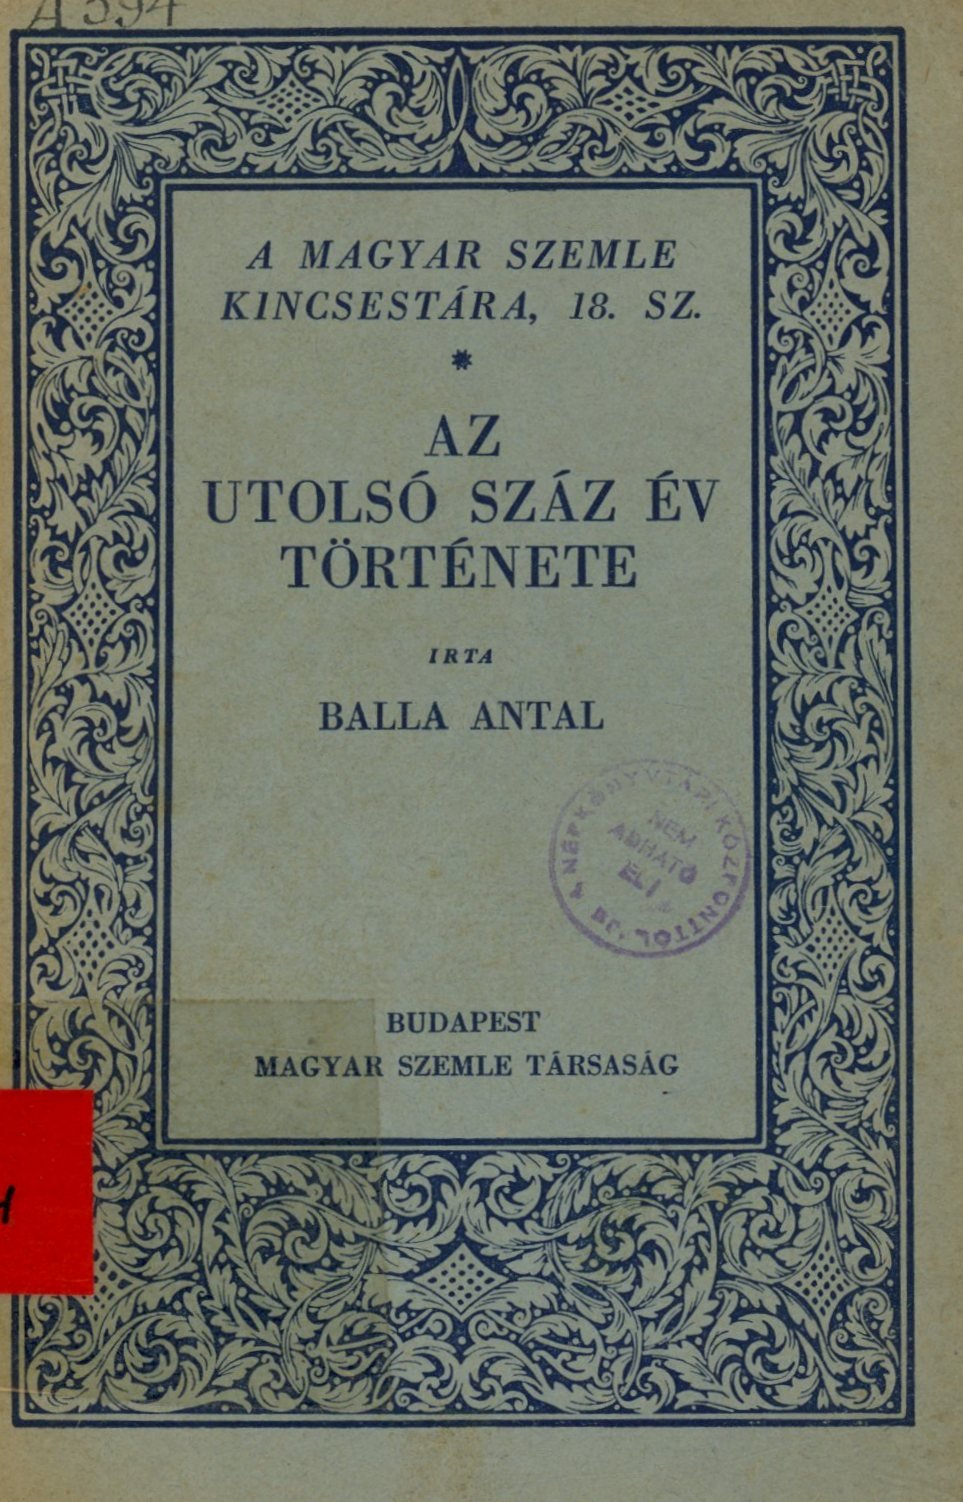 Balla Antal (Erkel Ferenc Területi Múzeum, Gyula CC BY-NC-SA)